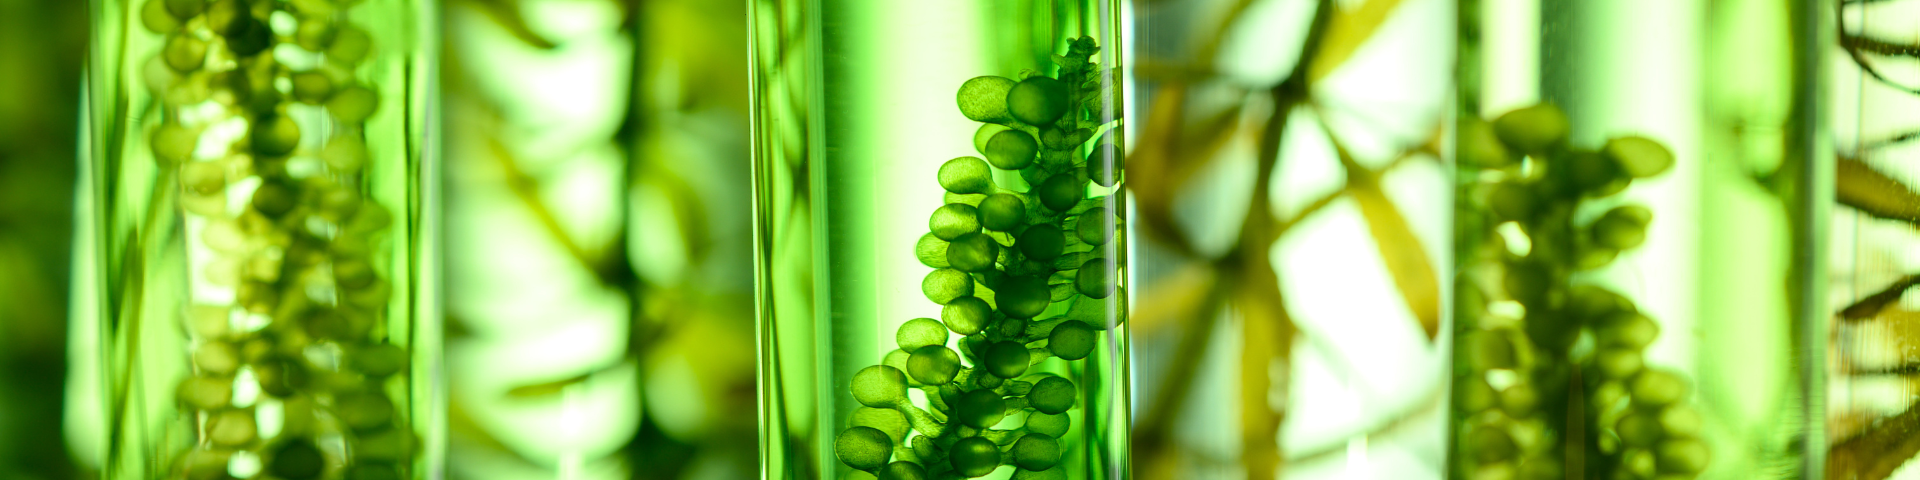 Green chemistry in tubes